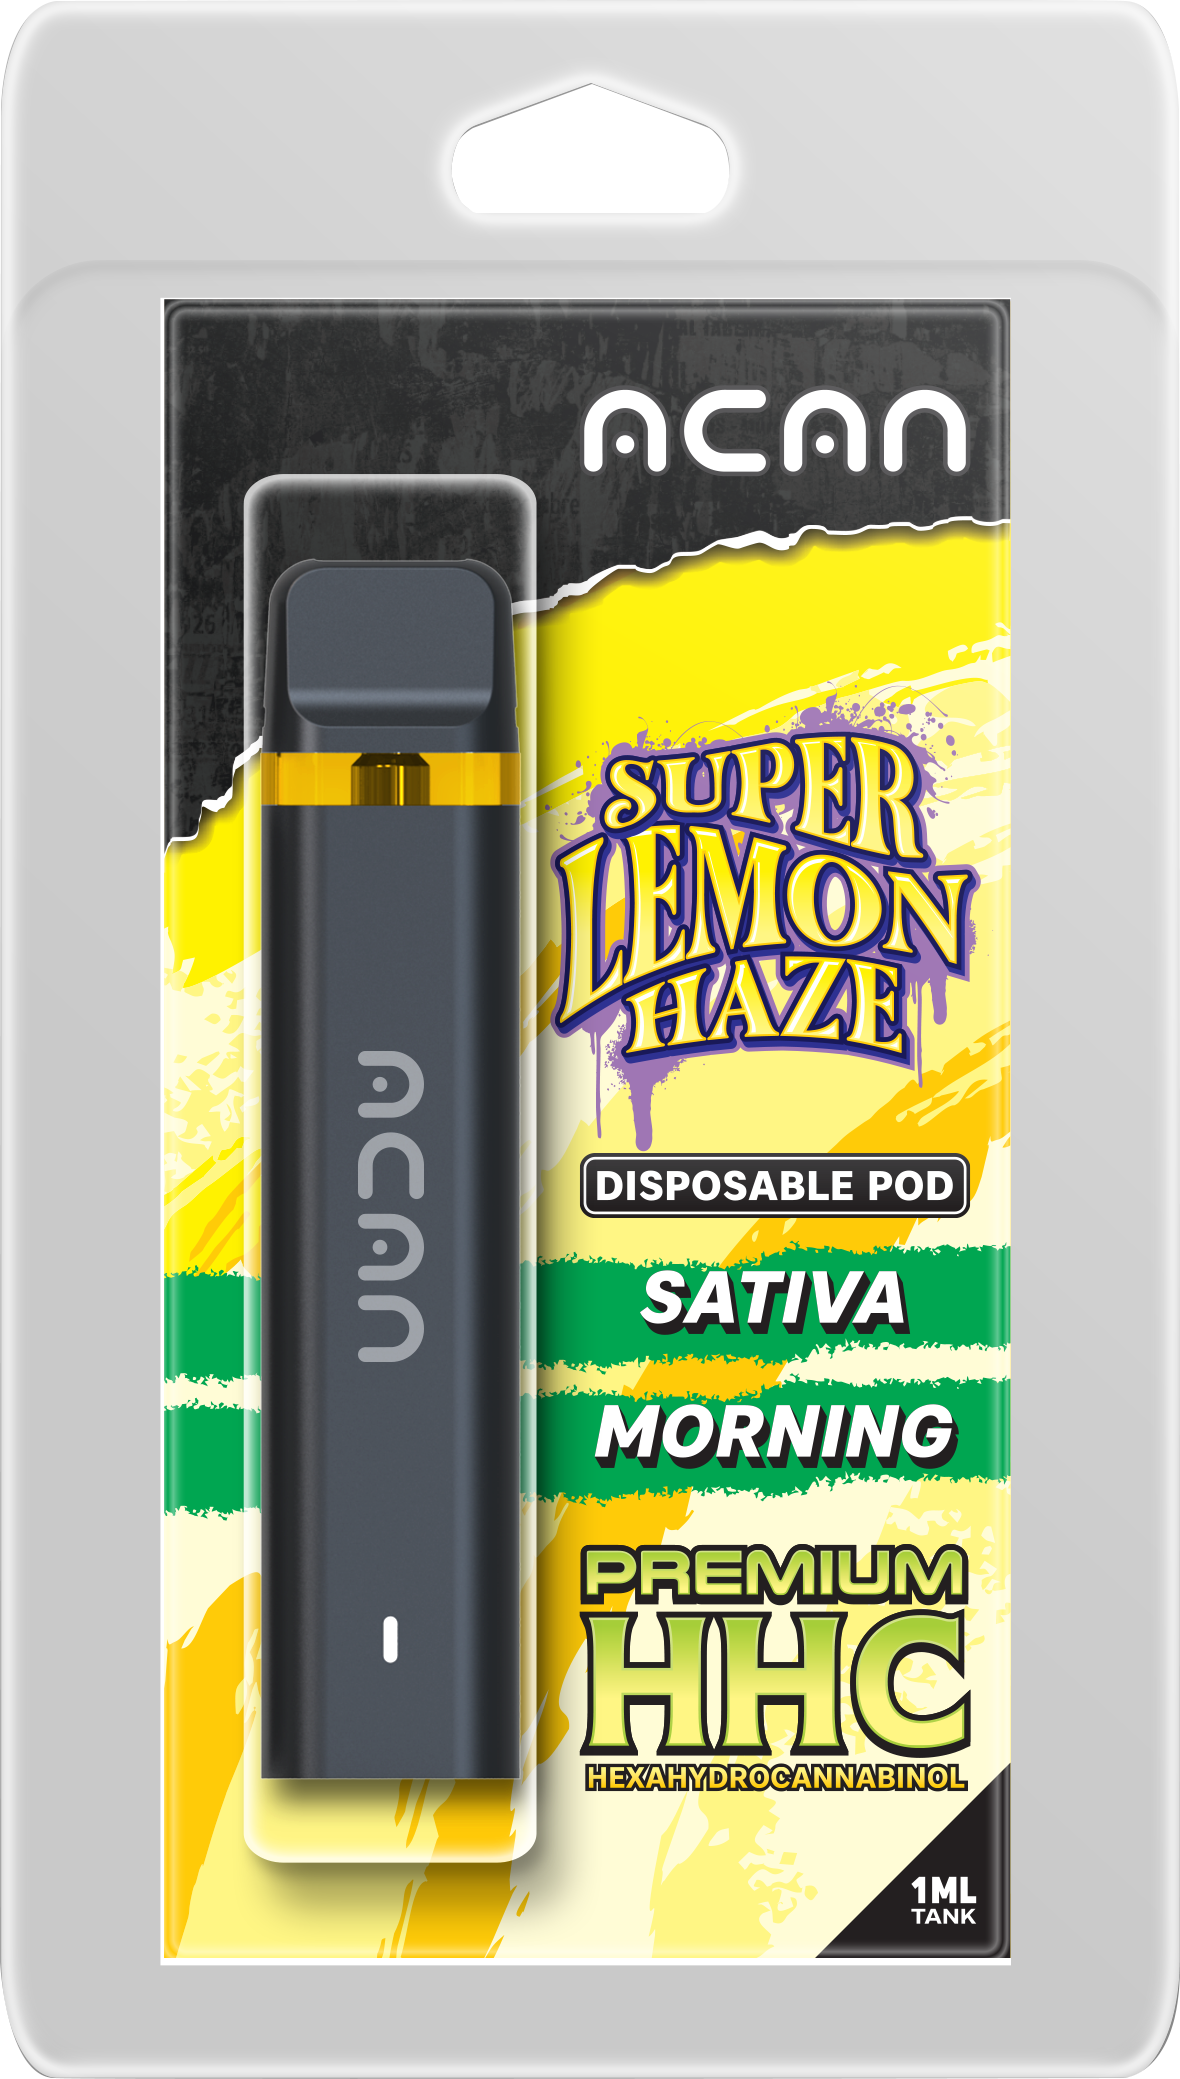 Super Lemon Haze Premium HHC